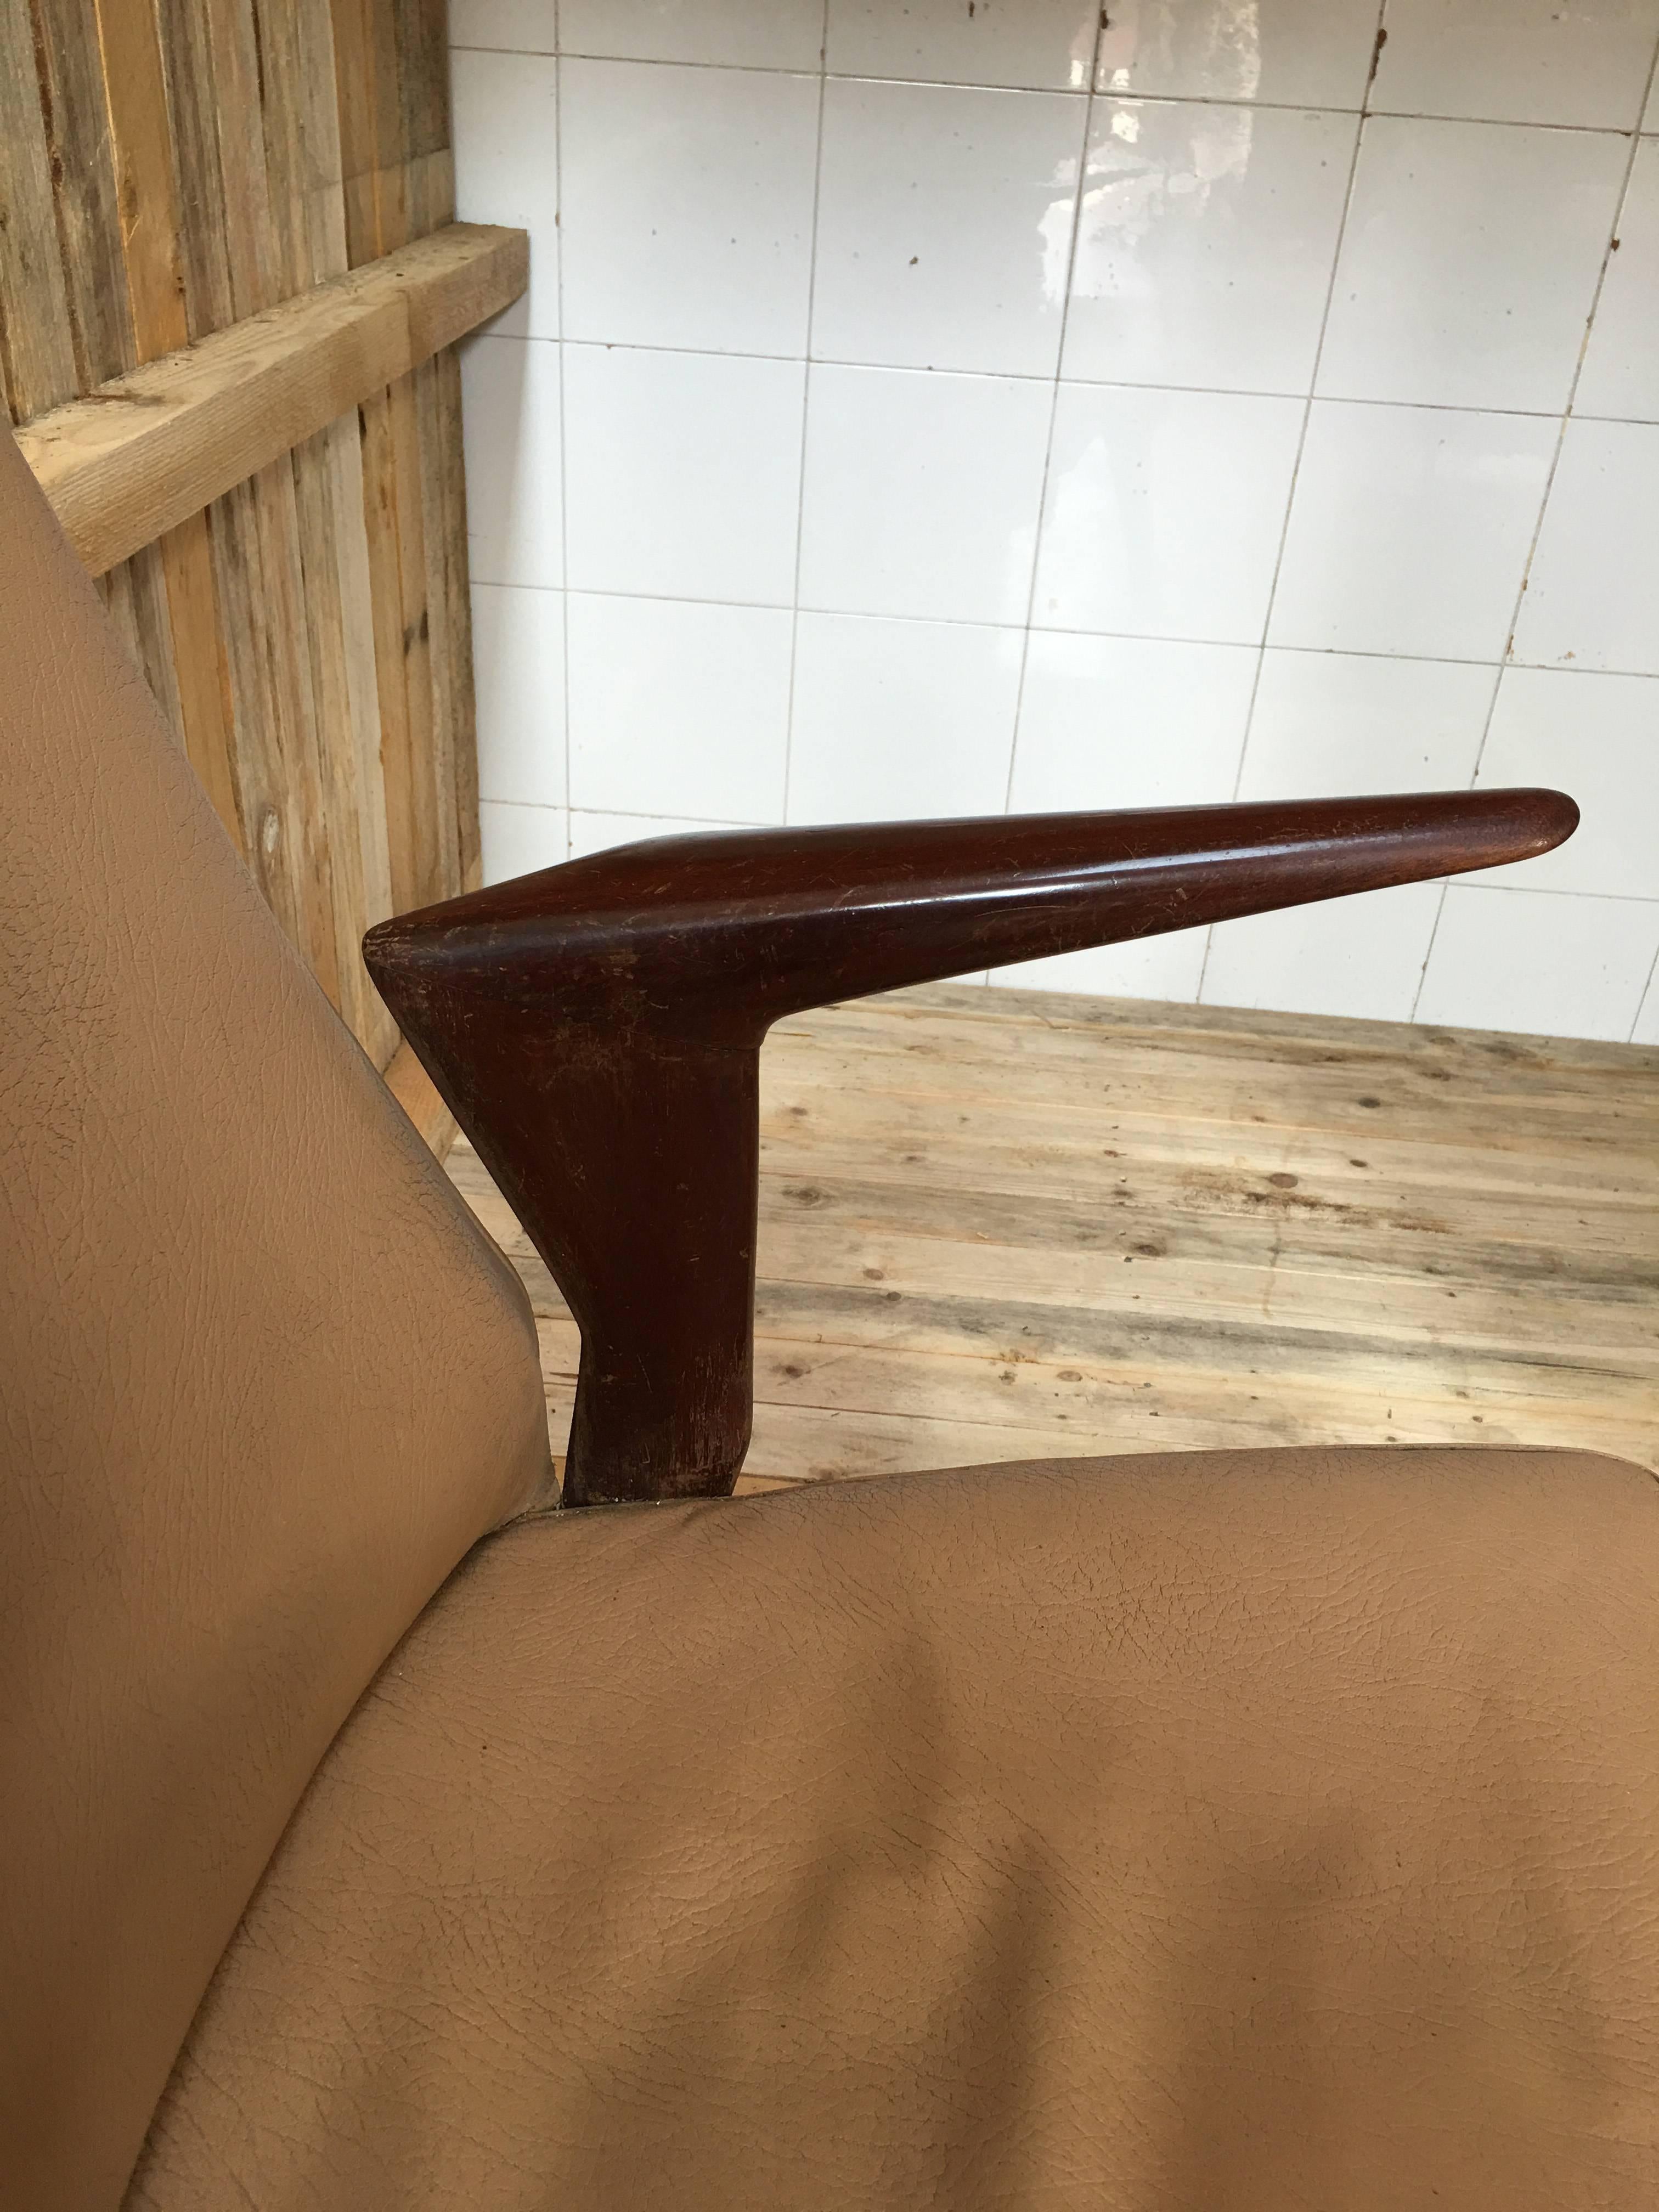 Three armchairs, design Osvaldo Borsani, 1948.
Rare model, solid mahogany wood, the seat is of ski fabric, are now being restored.